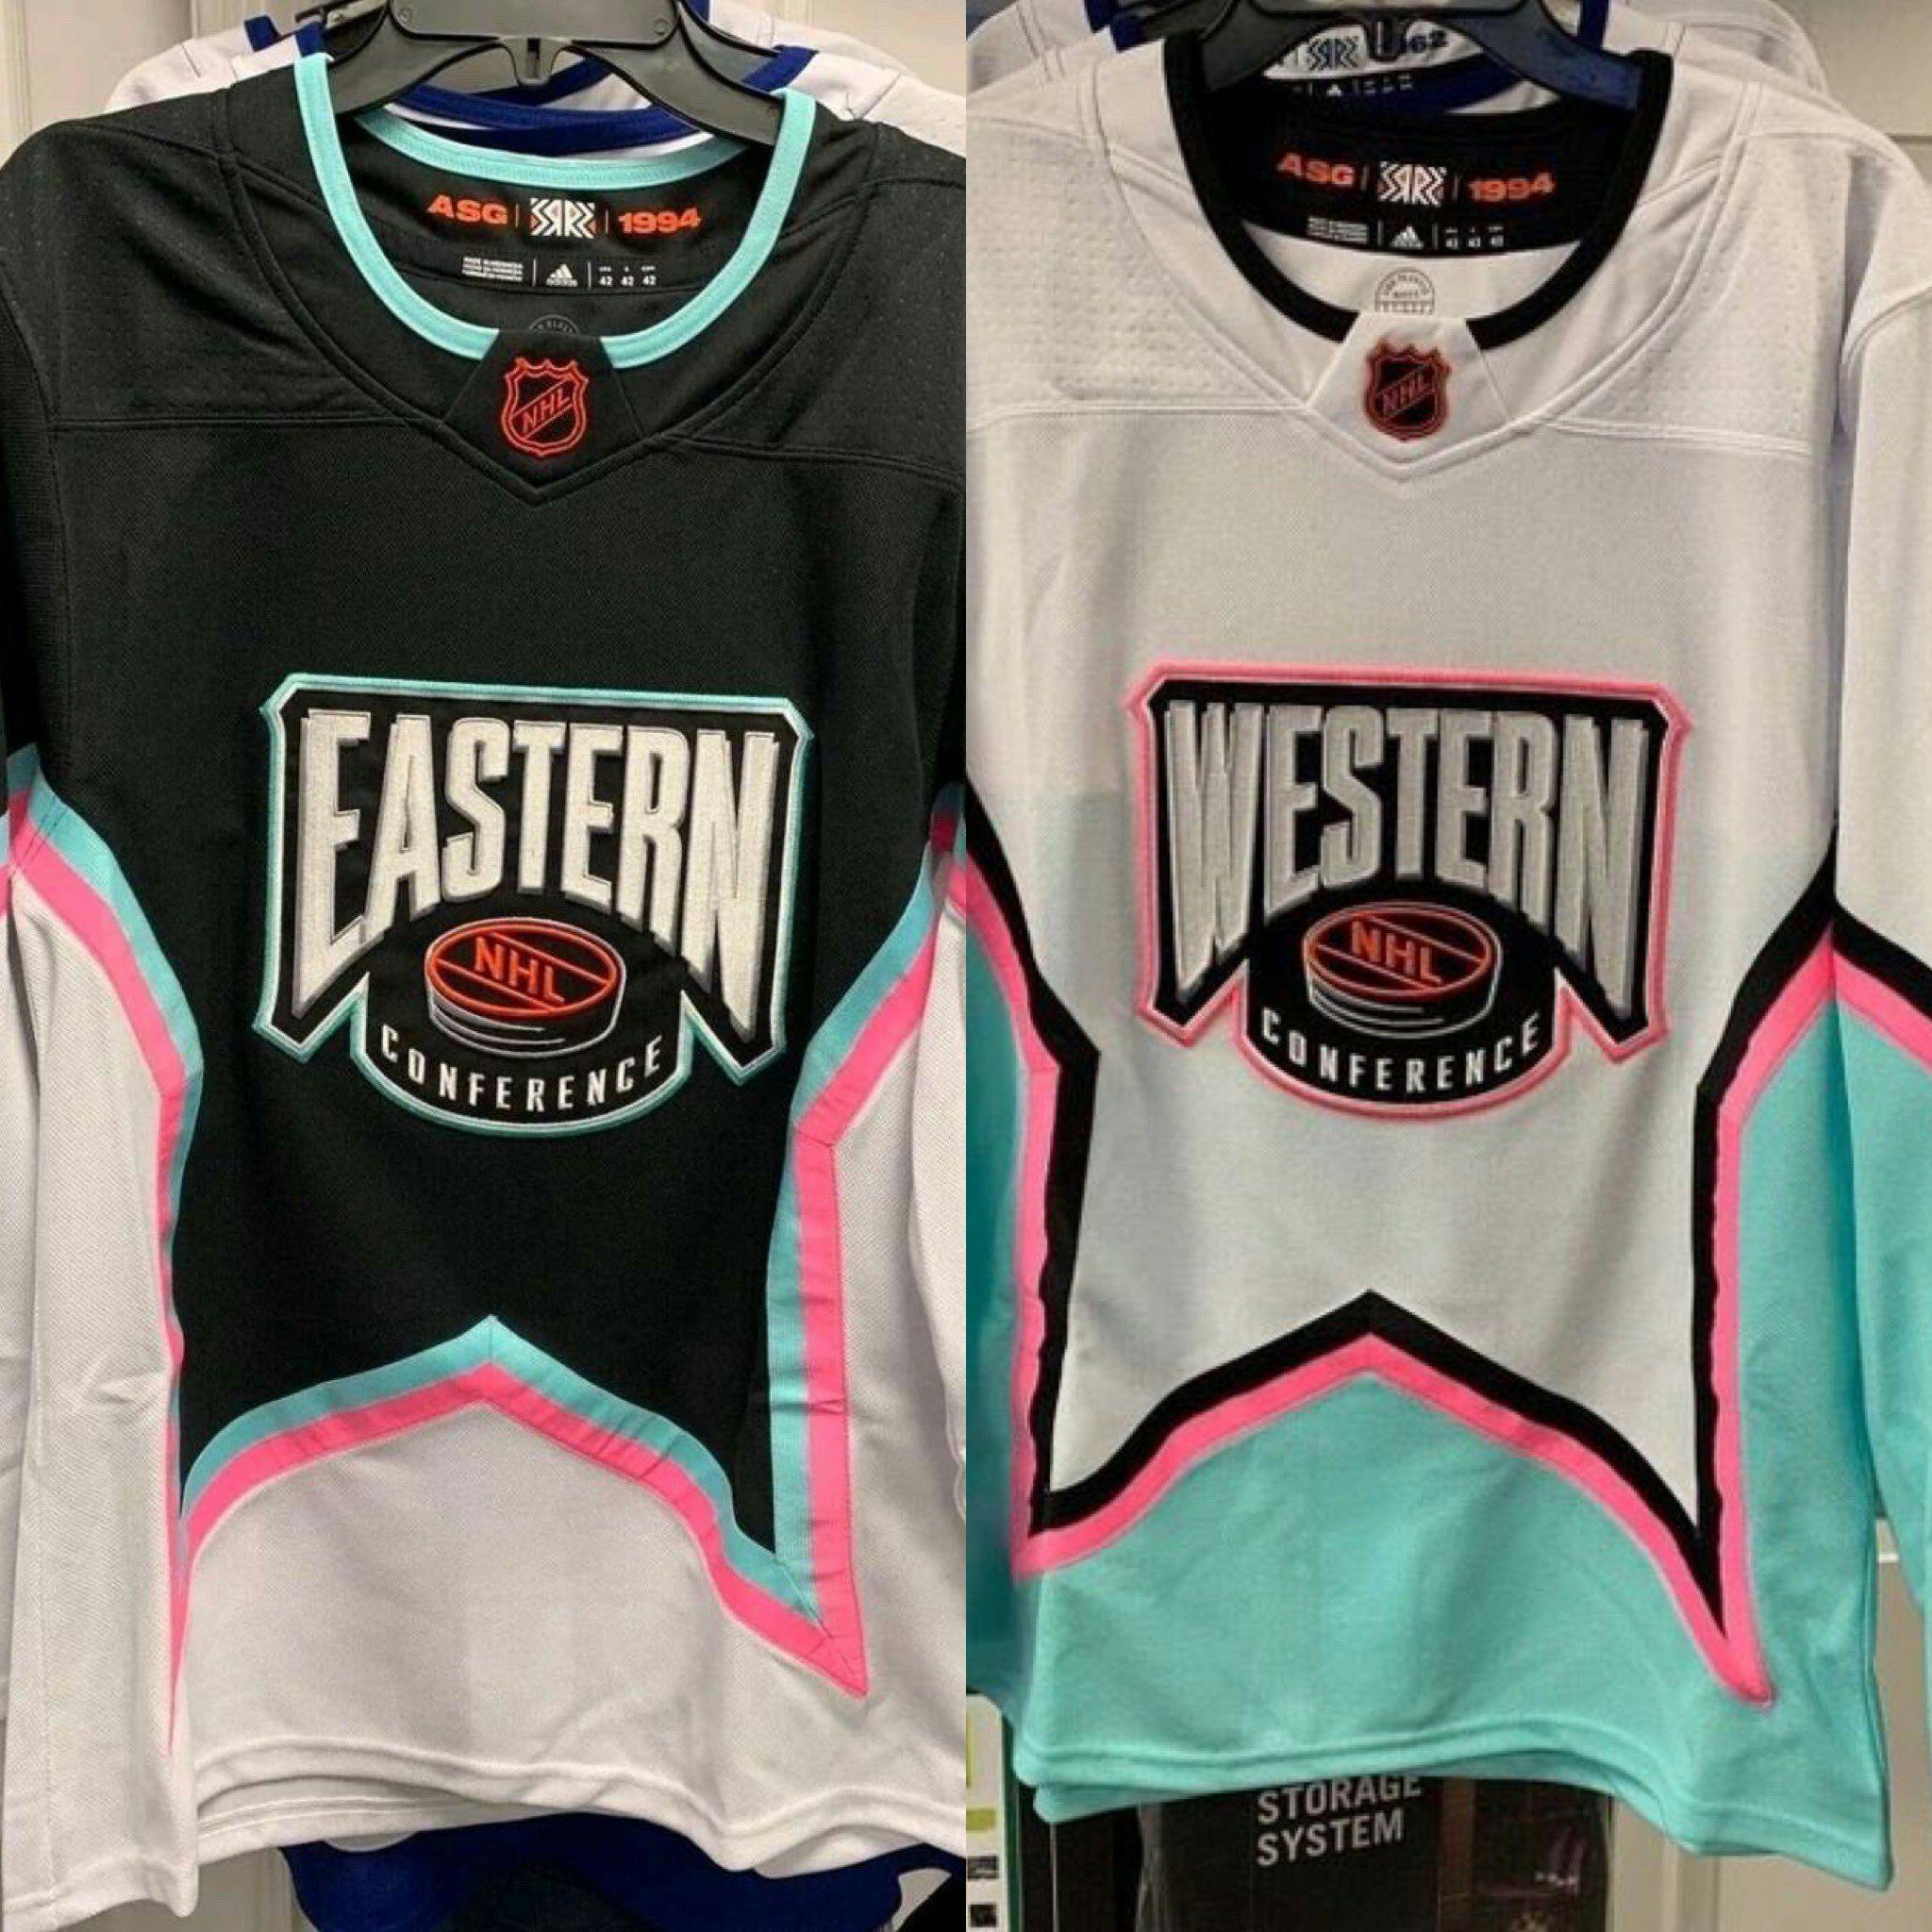 2023 NHL All-Star Game jerseys seemingly leak on